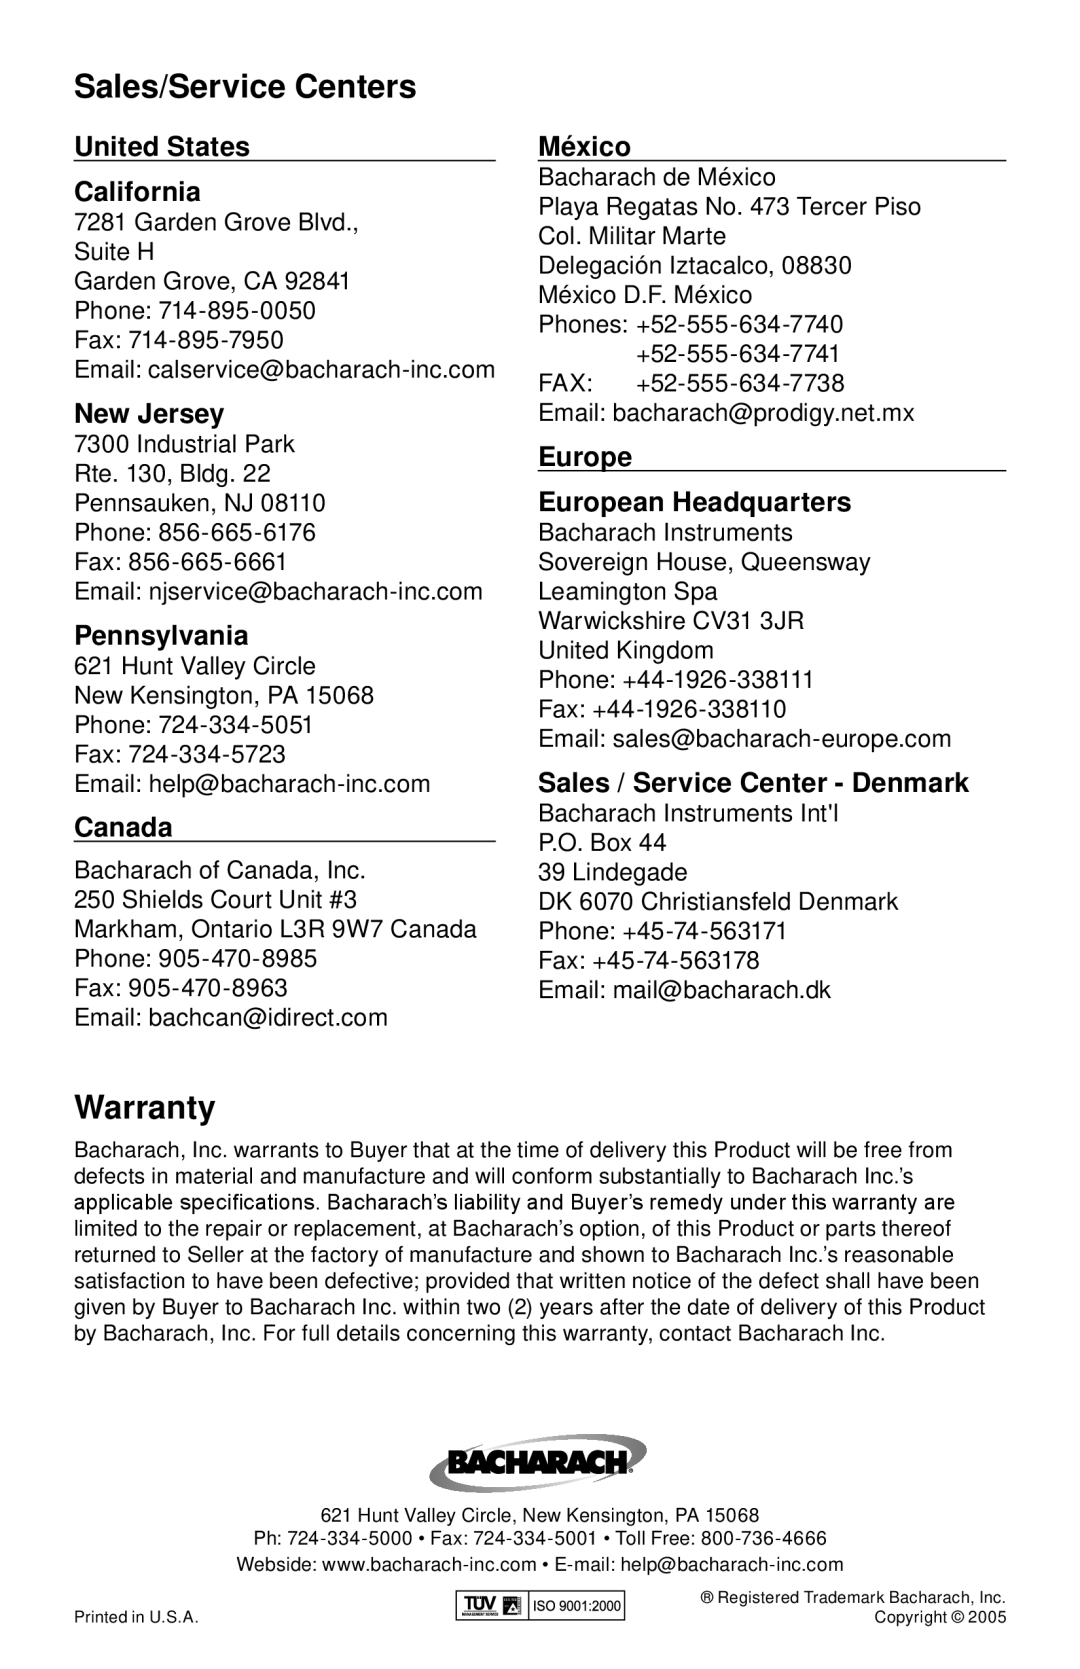 Bacharach 19-9336 Sales/Service Centers, Warranty, United States California, New Jersey, Pennsylvania, Canada, México 